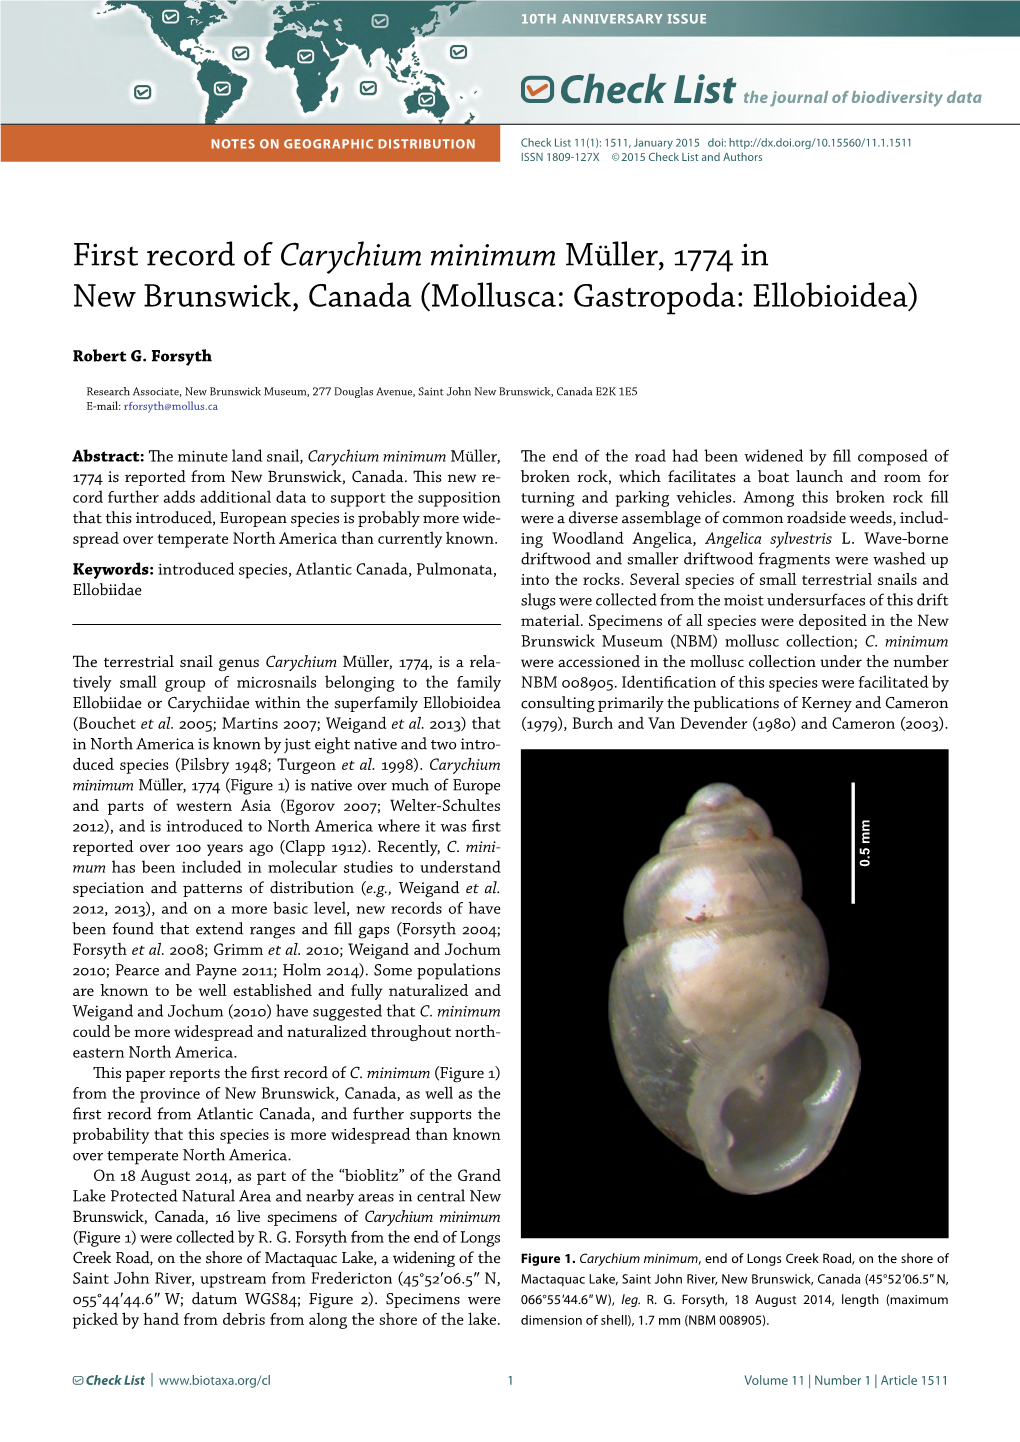 Carychium Minimum Müller, 1774 in New Brunswick, Canada (Mollusca: Gastropoda: Ellobioidea)